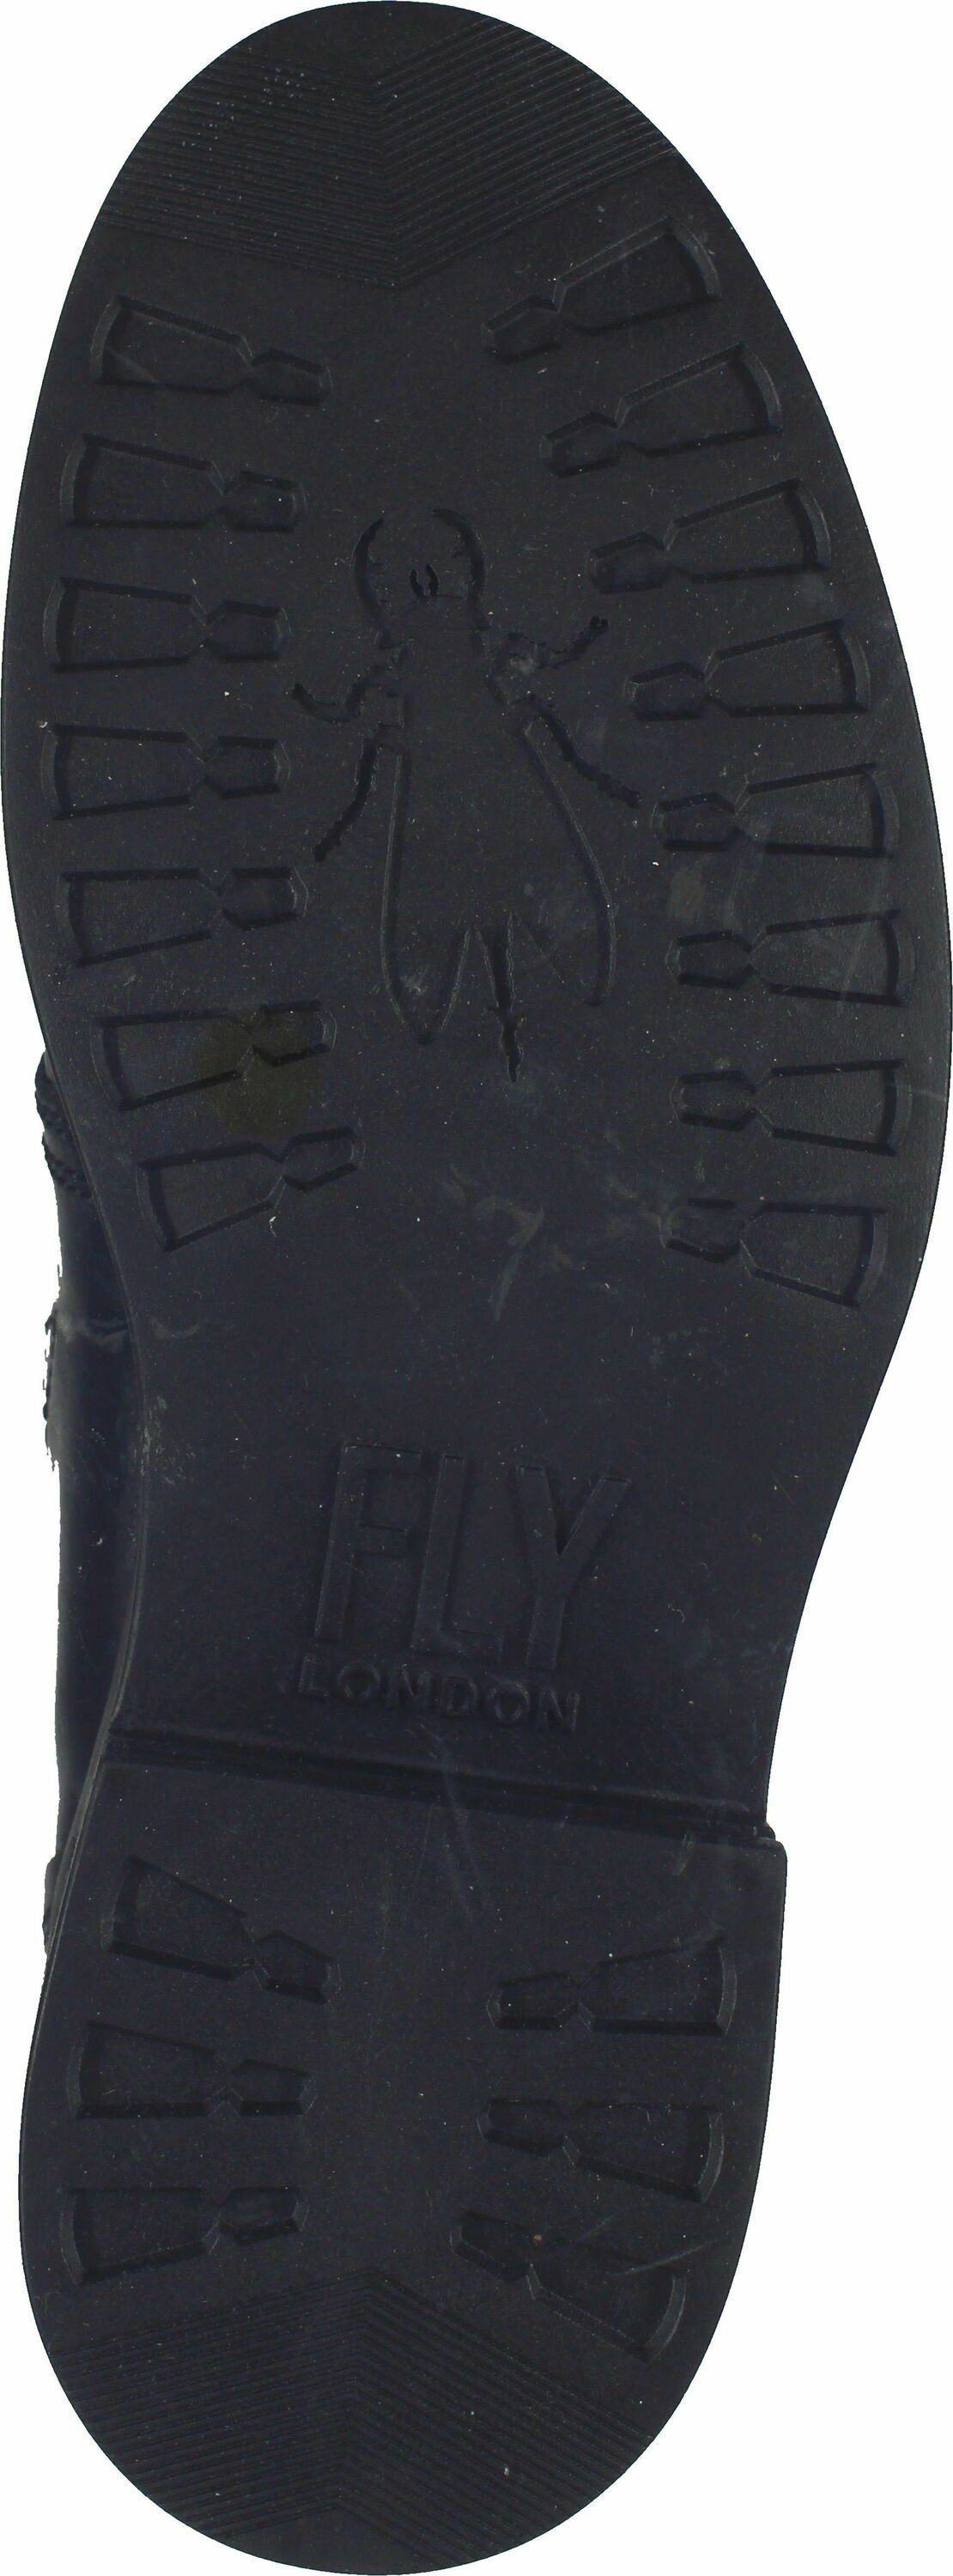 Schuhe Stiefeletten Fly London Stiefelette Leder Schnürstiefelette